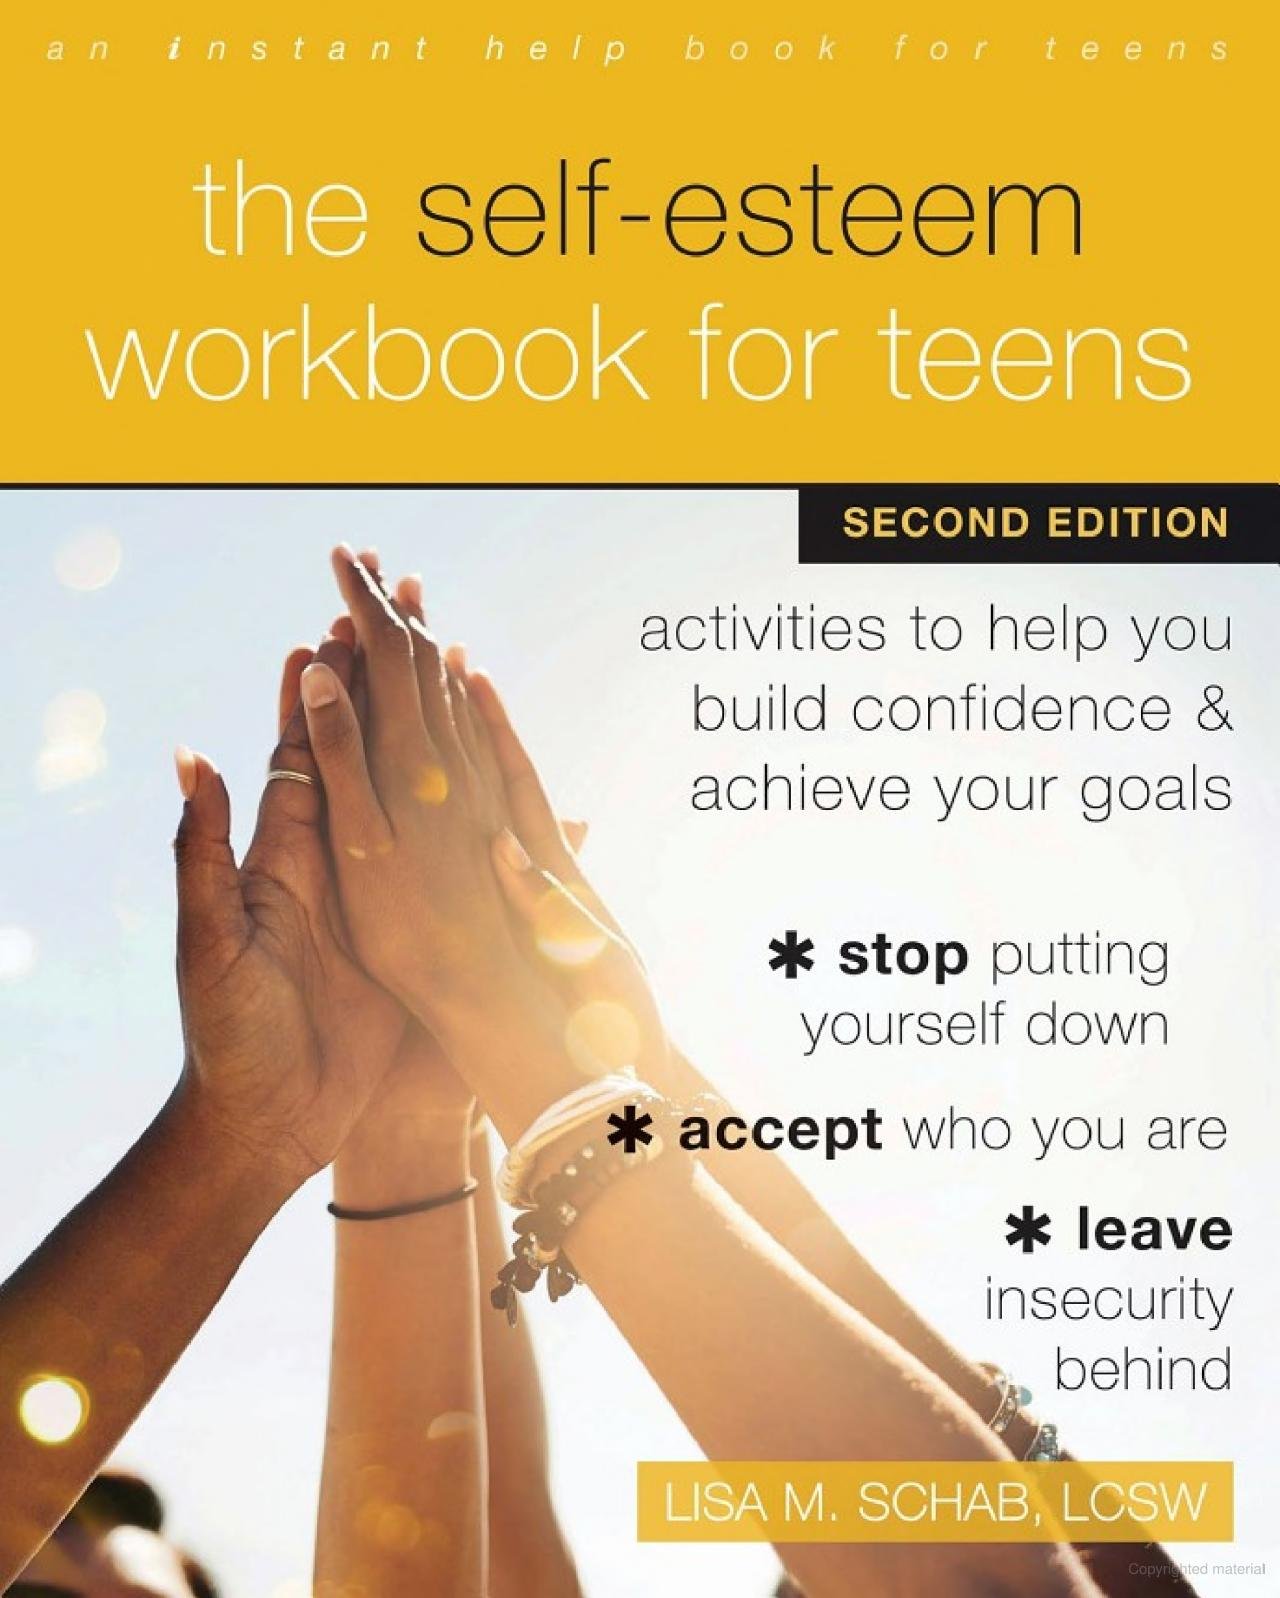 The self esteem workbook for teens book cover.jpeg